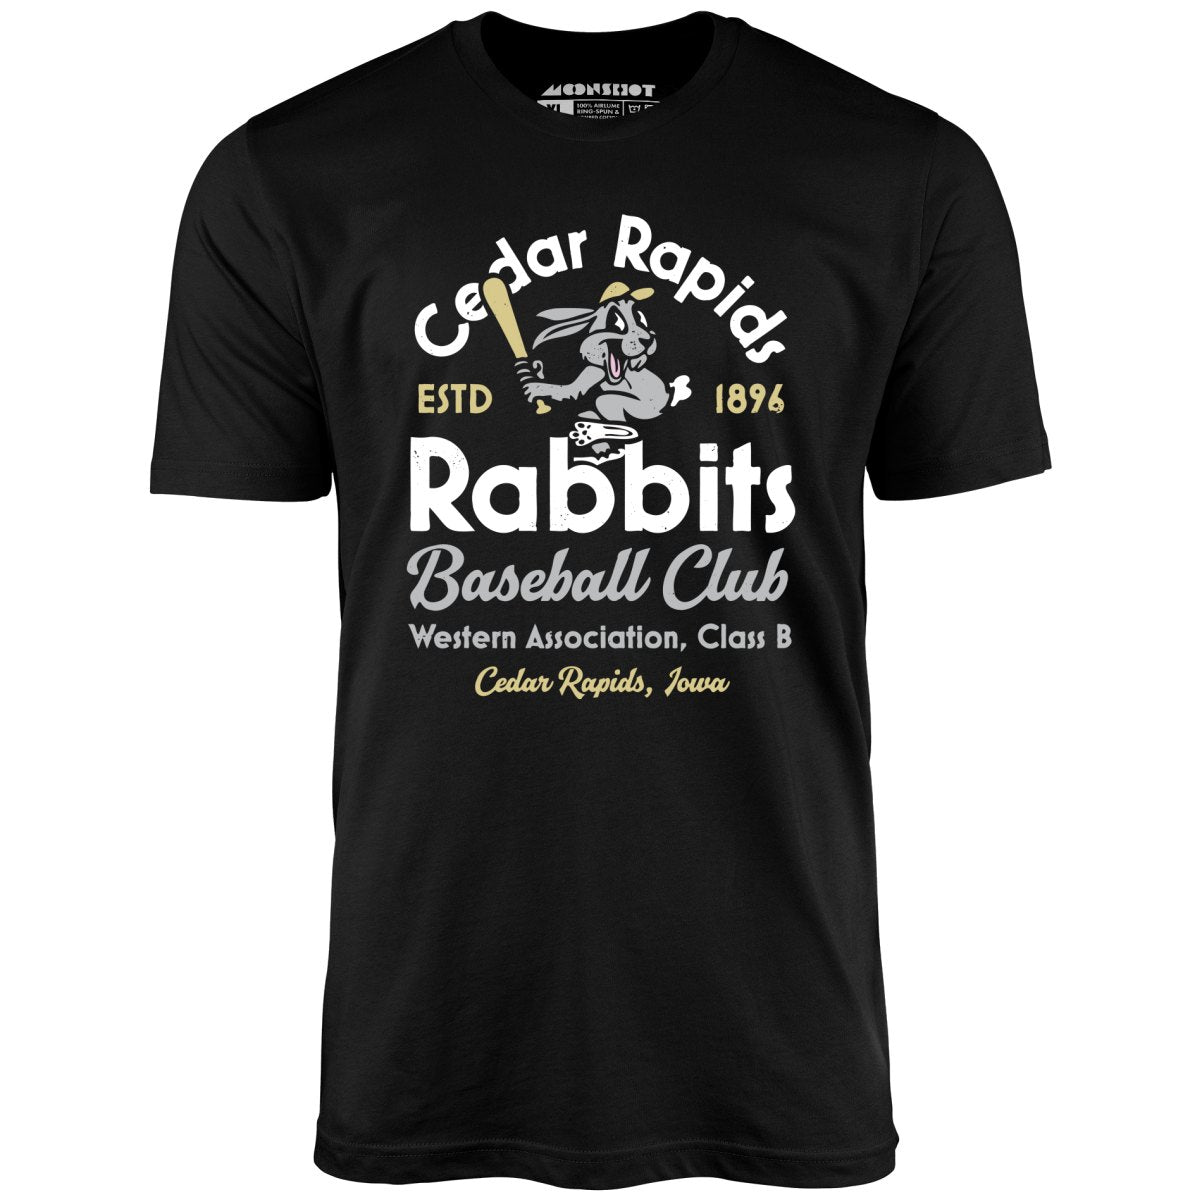 Cedar Rapids Rabbits - Iowa - Vintage Defunct Baseball Teams - Unisex T-Shirt